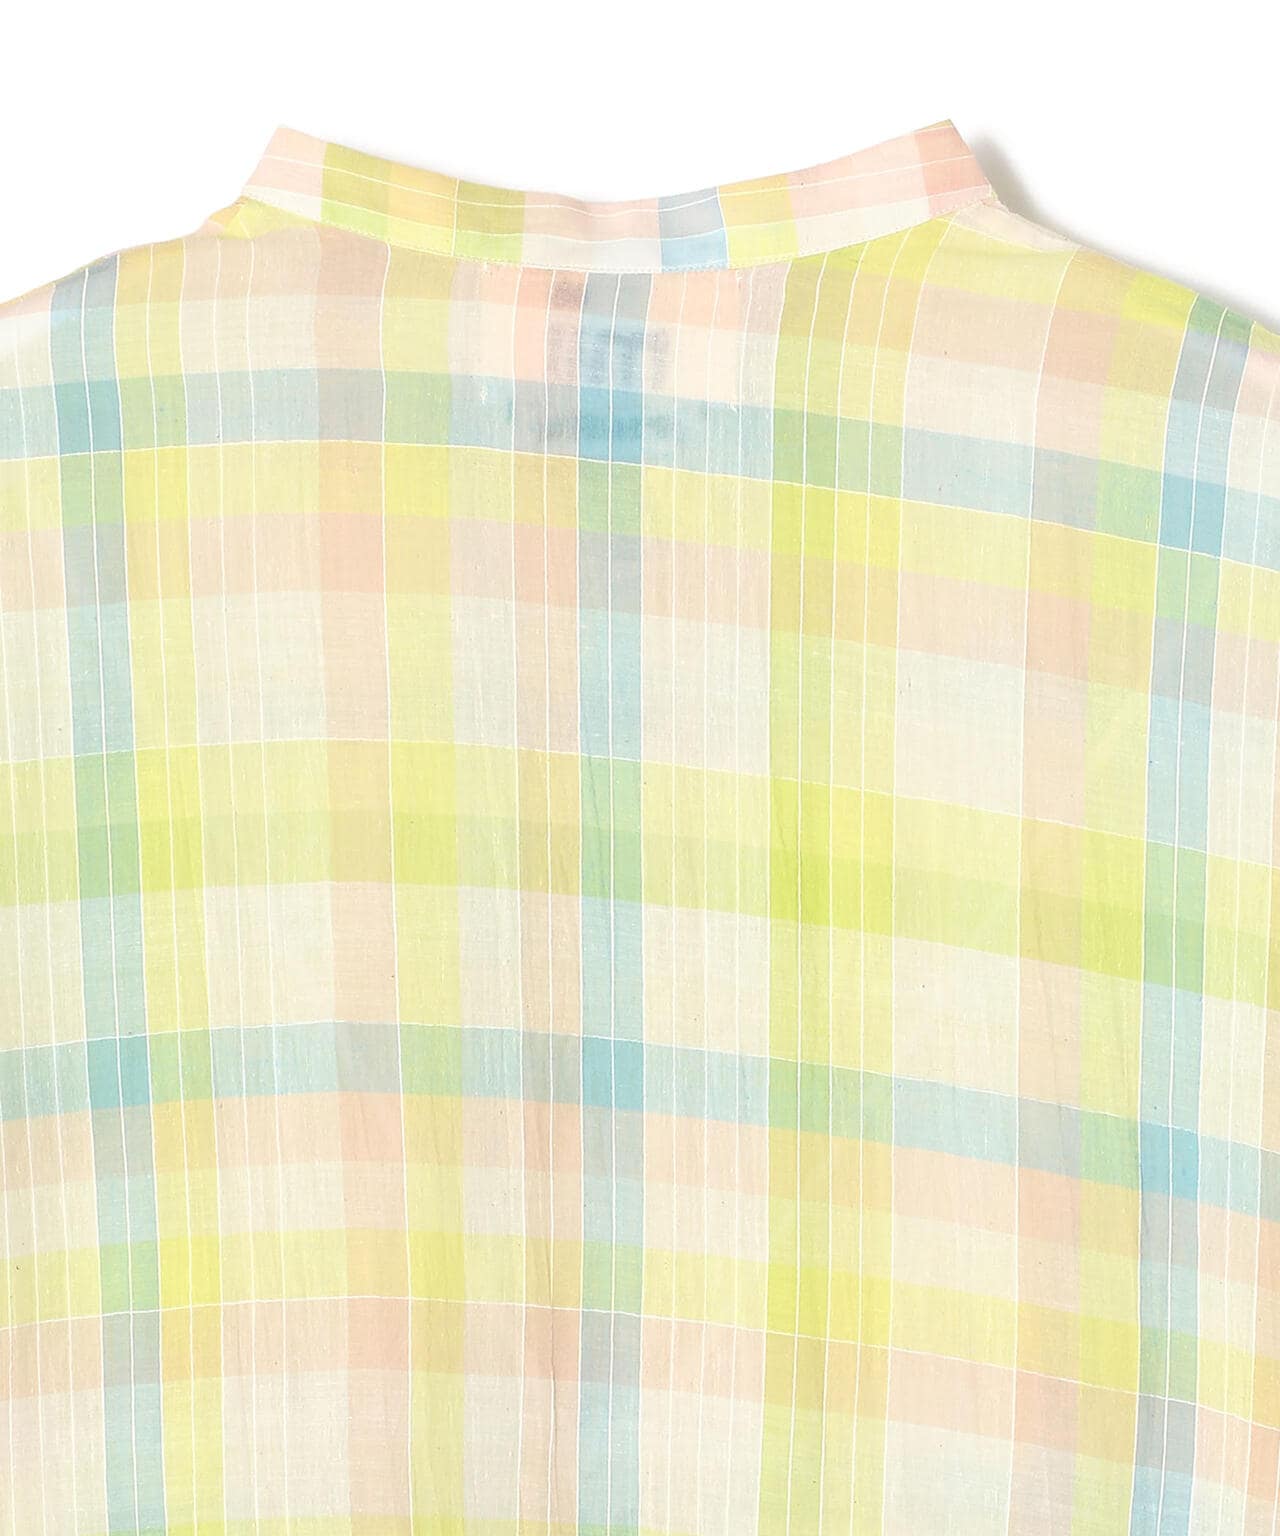 mii/ミー/Limited khadi shirt/カディーシャツ